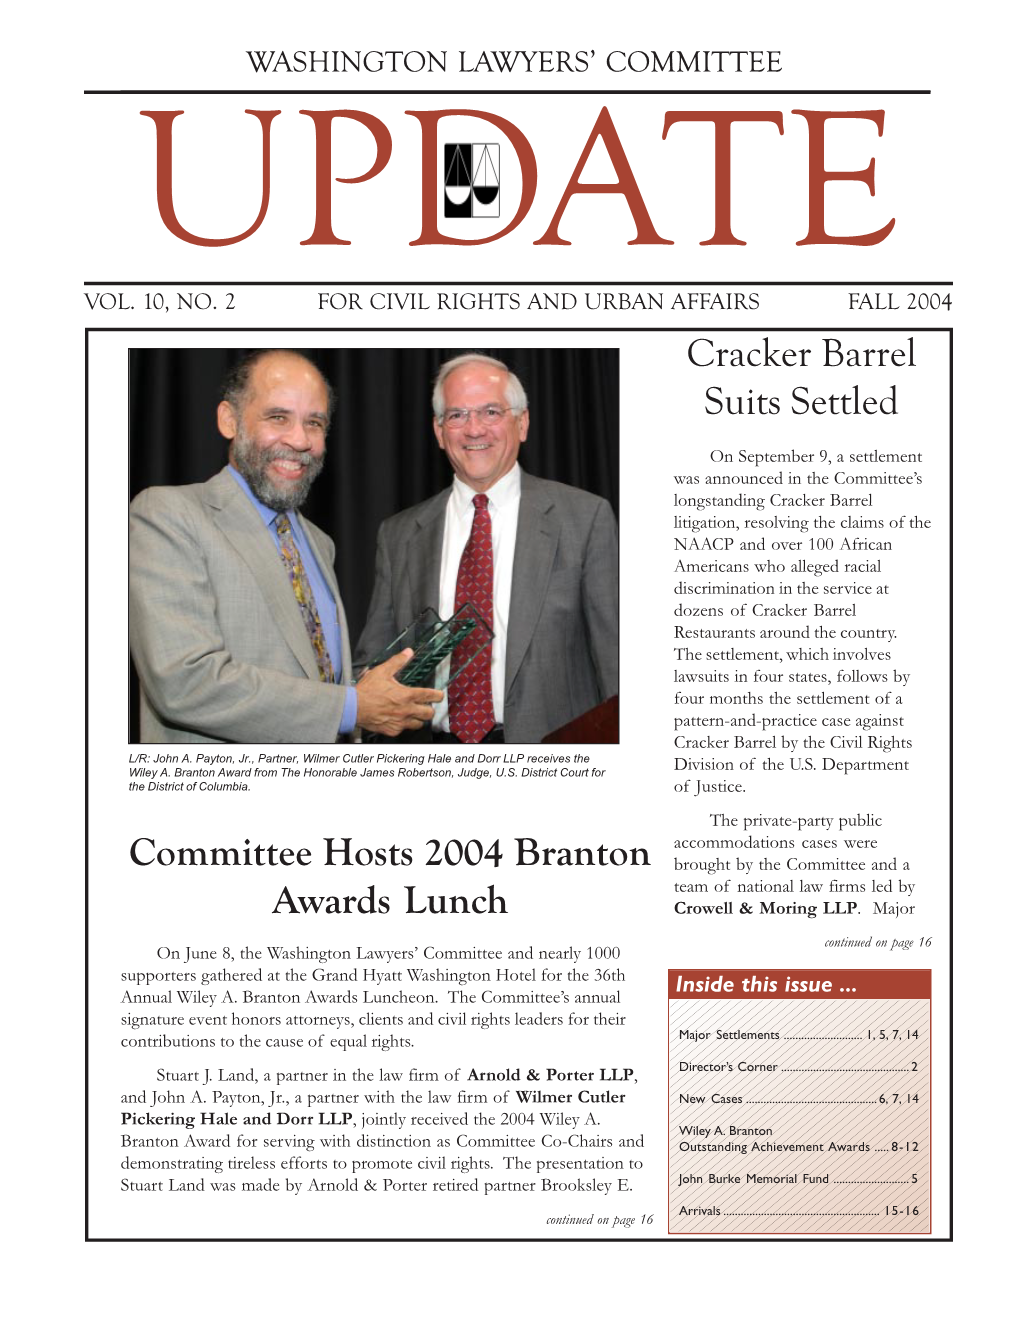 Committee Hosts 2004 Branton Awards Lunch Cracker Barrel Suits Settled